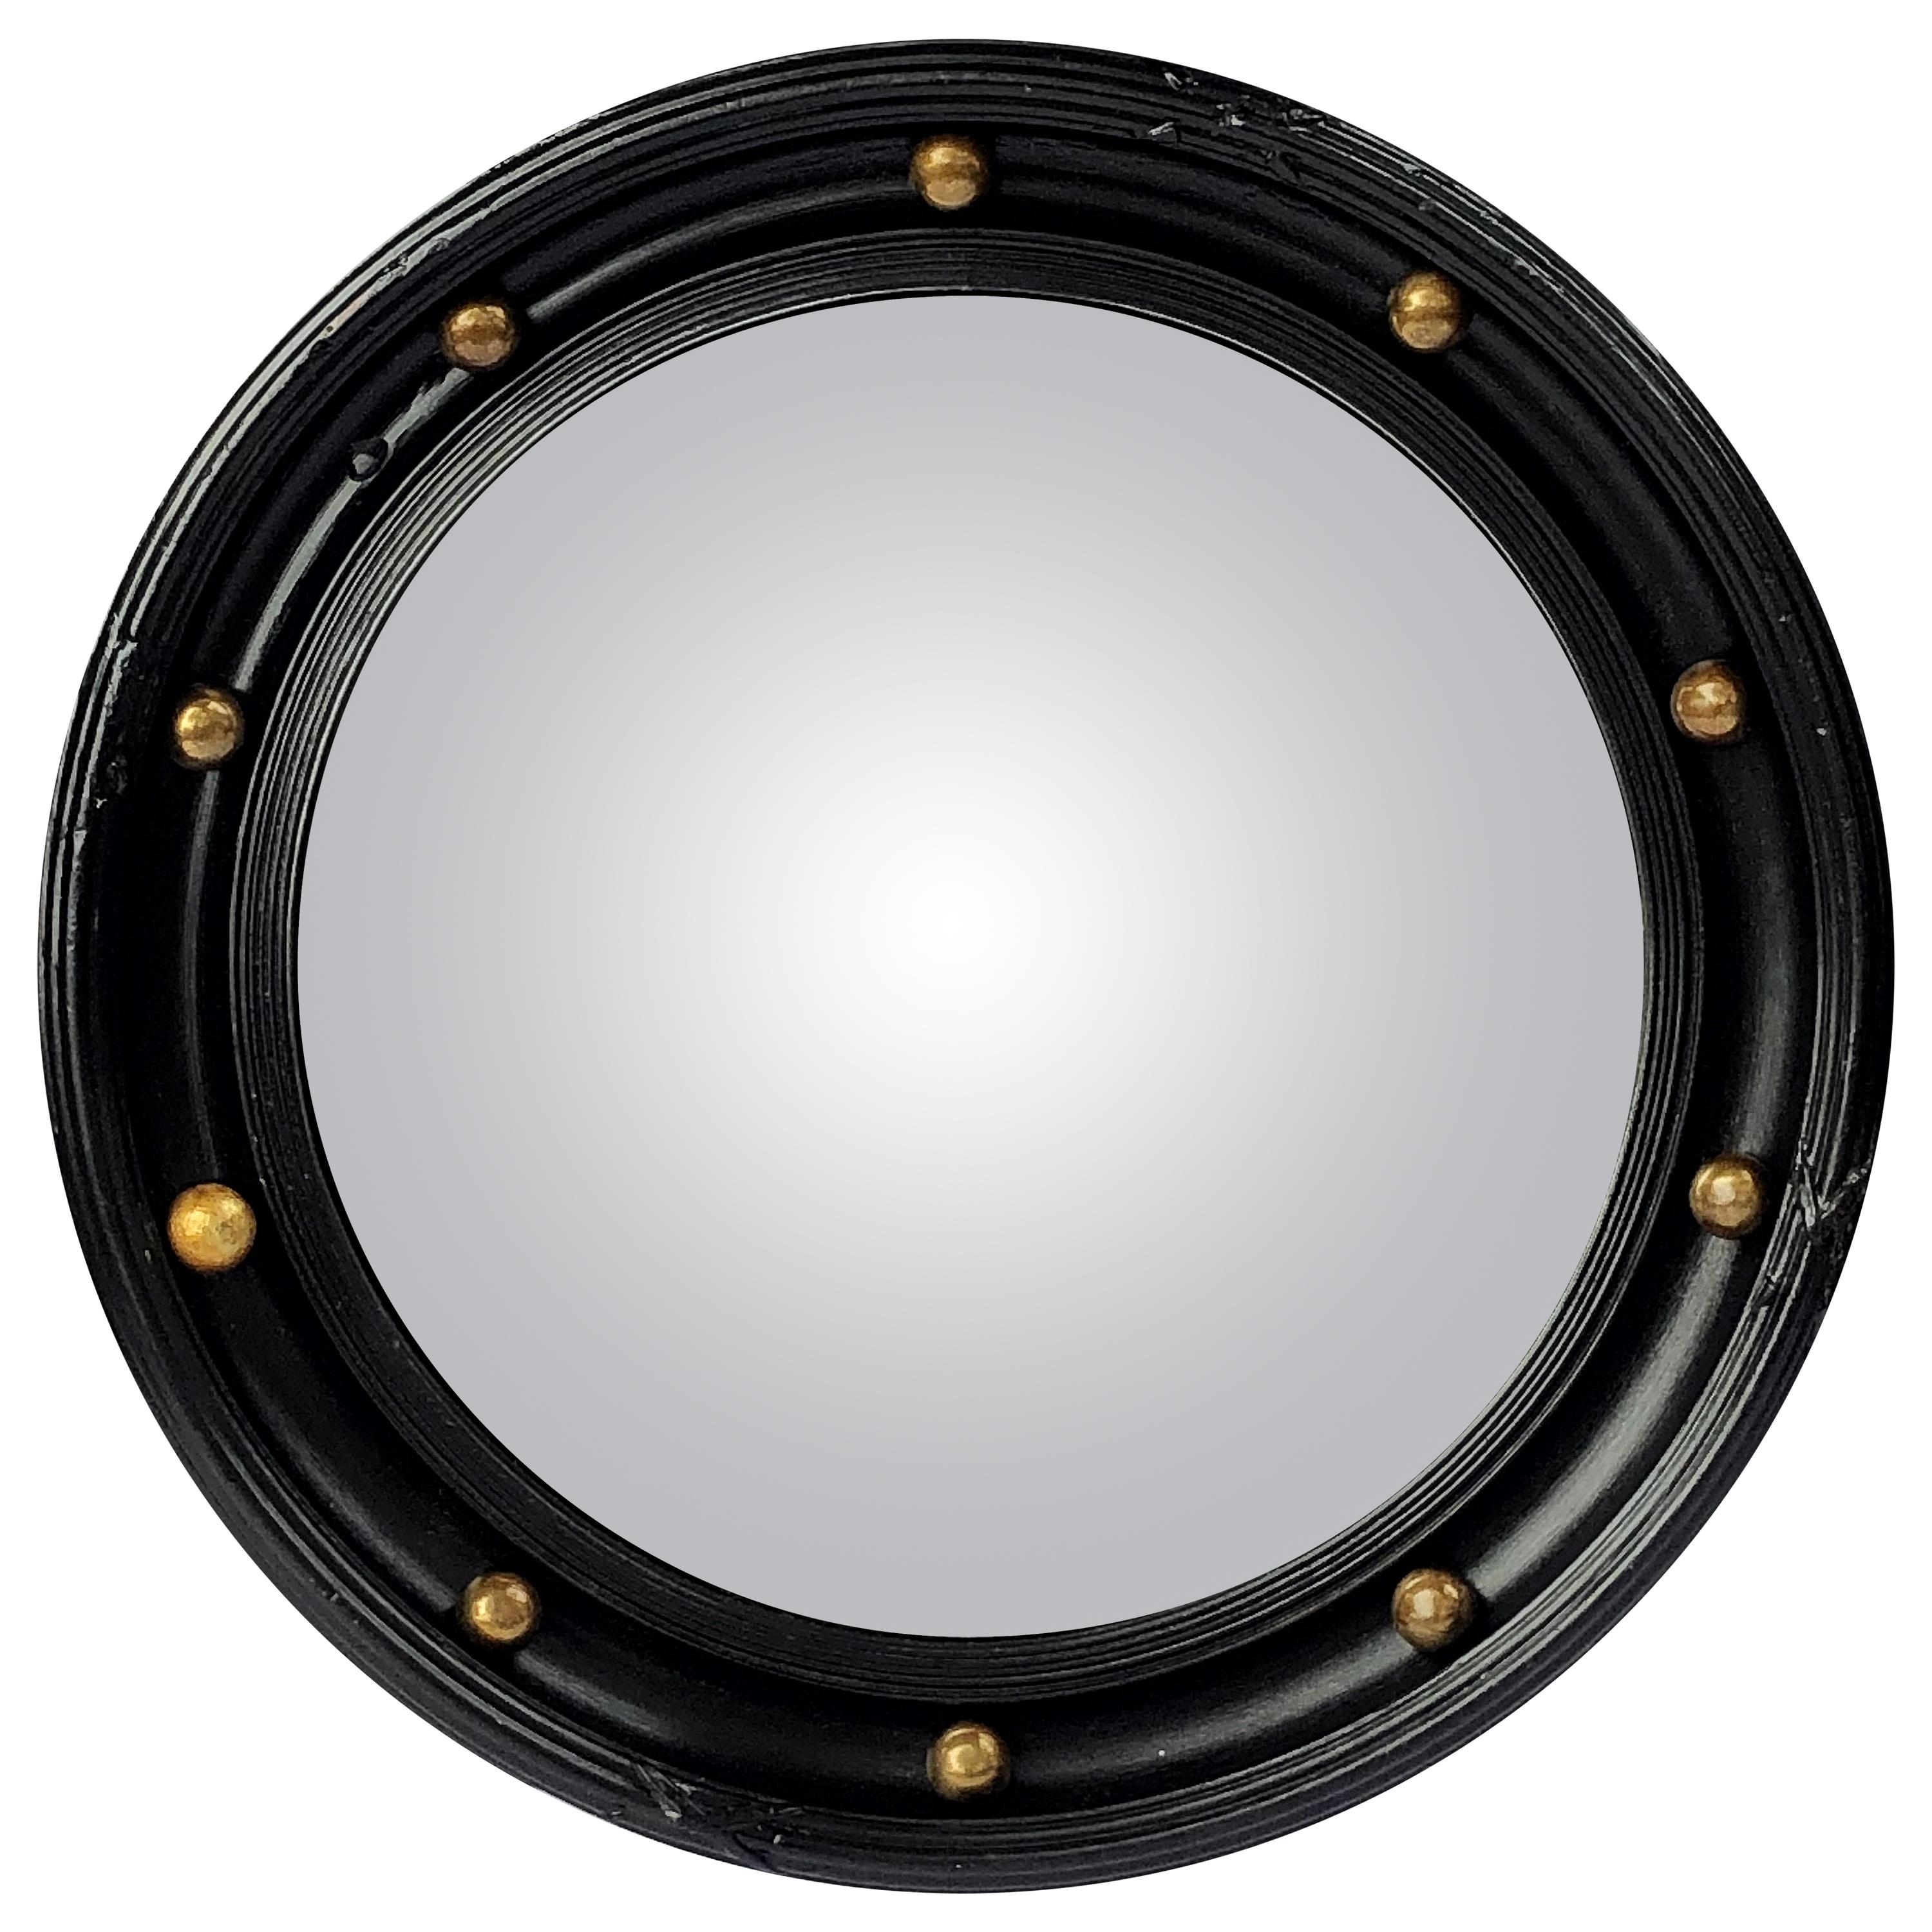 English Round Ebony Black and Gold Framed Convex Mirror (Diameter 15 1/2)